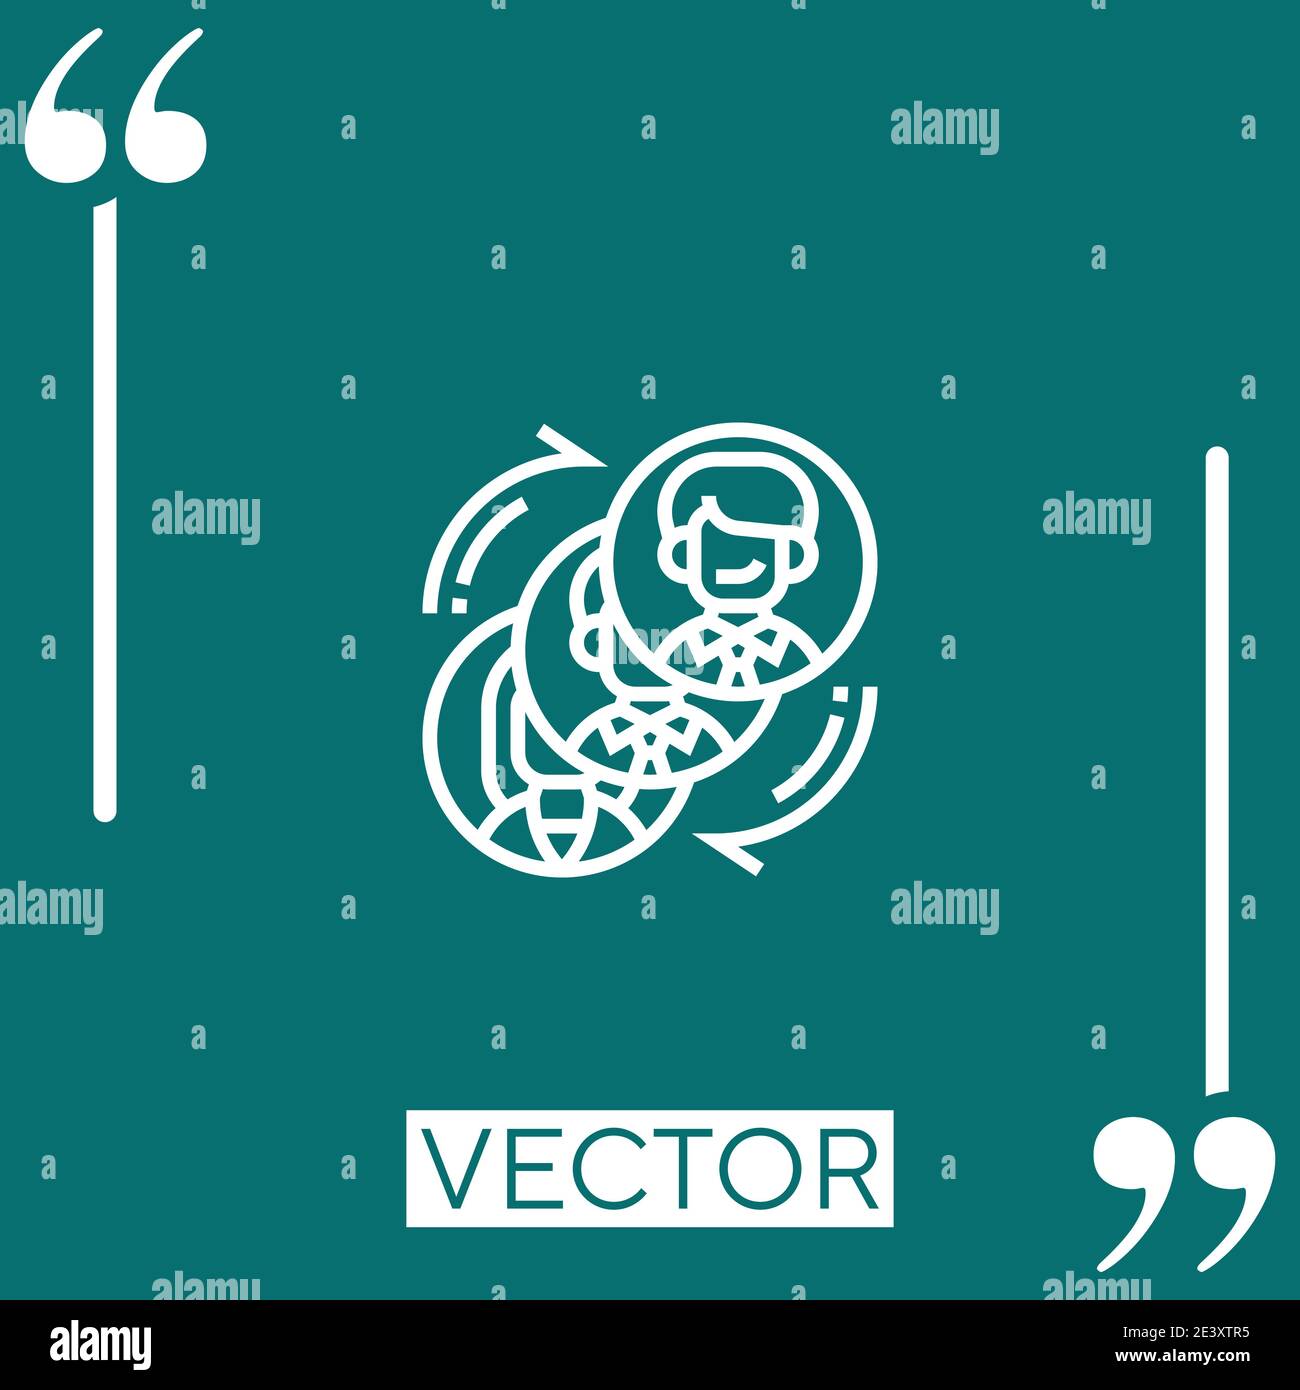 turnover vector icon Linear icon. Editable stroked line Stock Vector